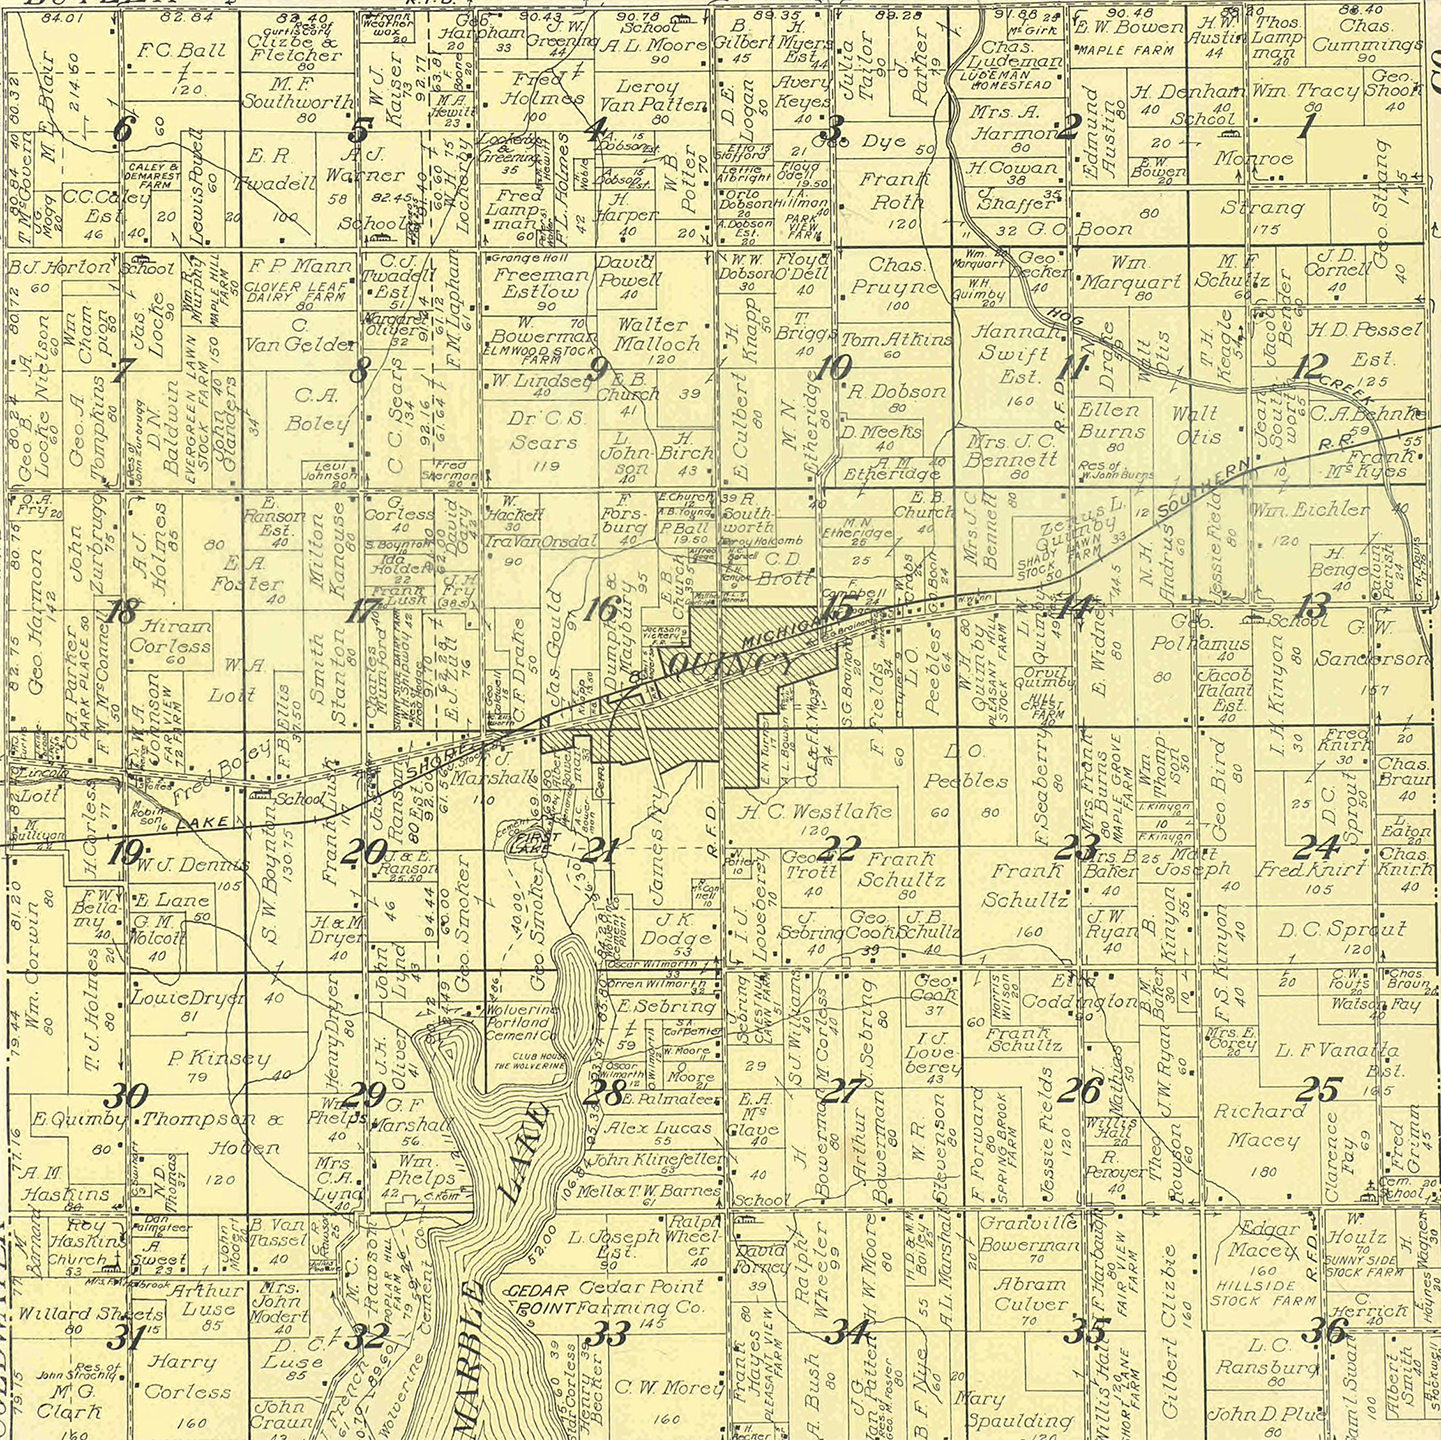 1915 Quincy Township, Michigan landownership map